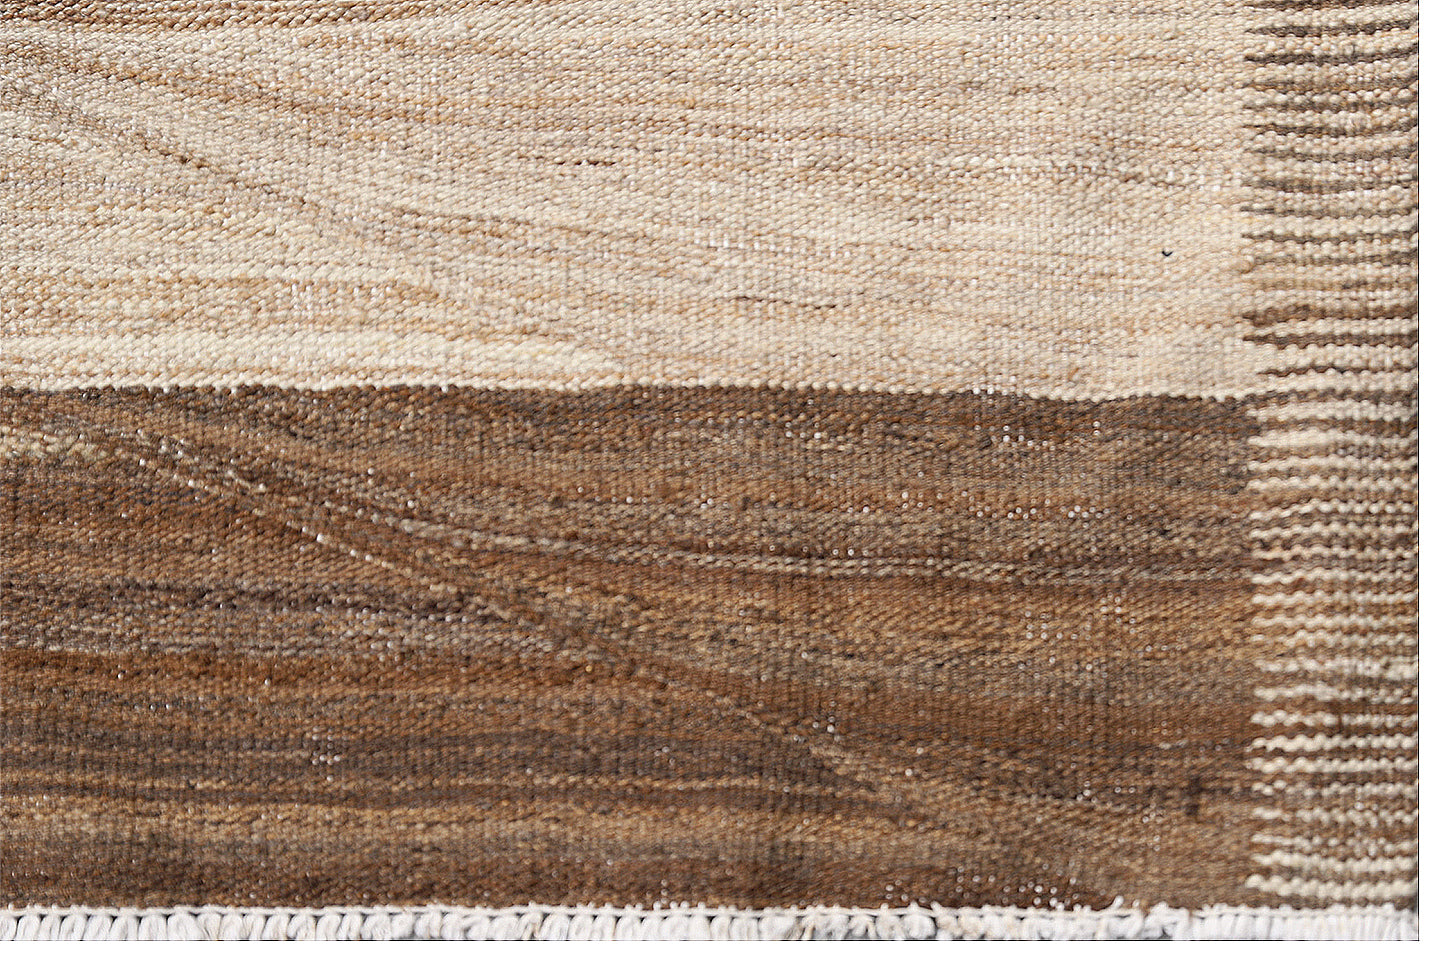 12x18 Large Ariana Striped Brown Ivory Tan Kilim